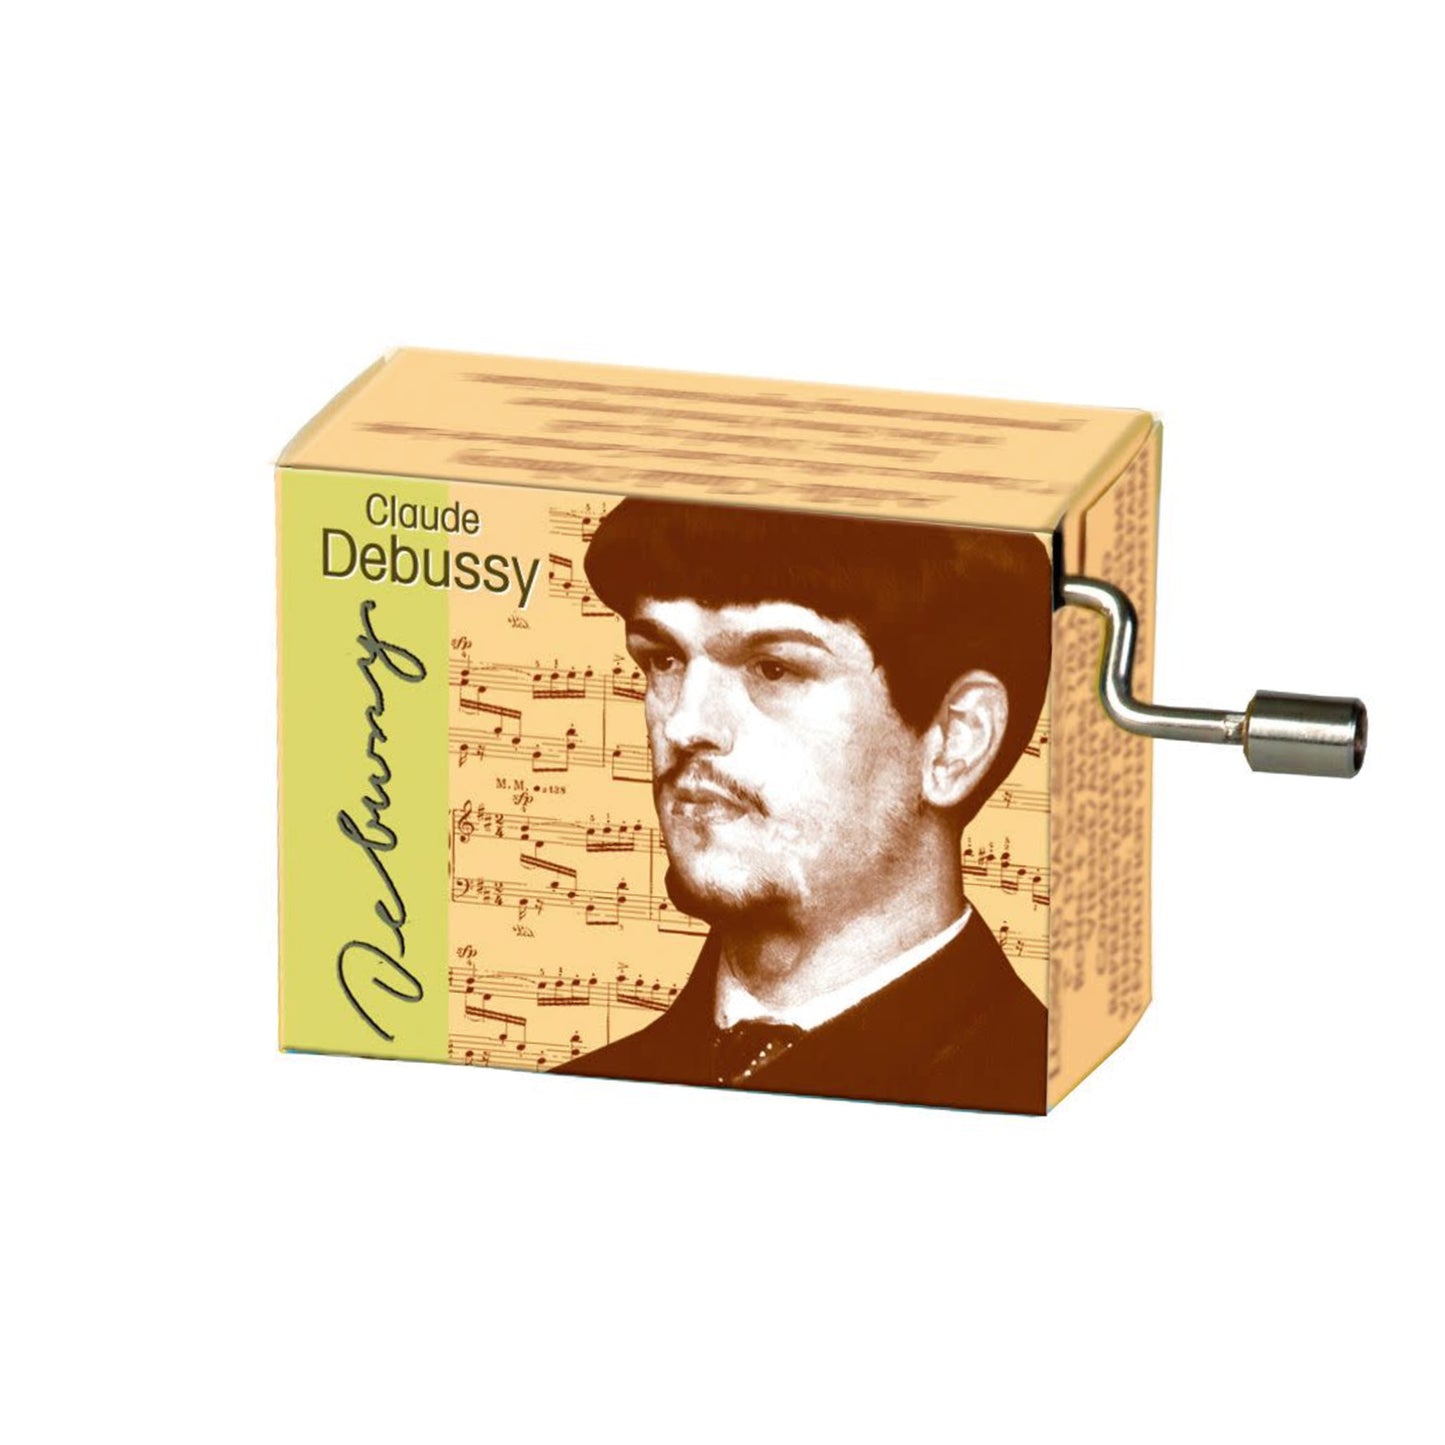 Claude Debussy, Clair de Lune Music Box